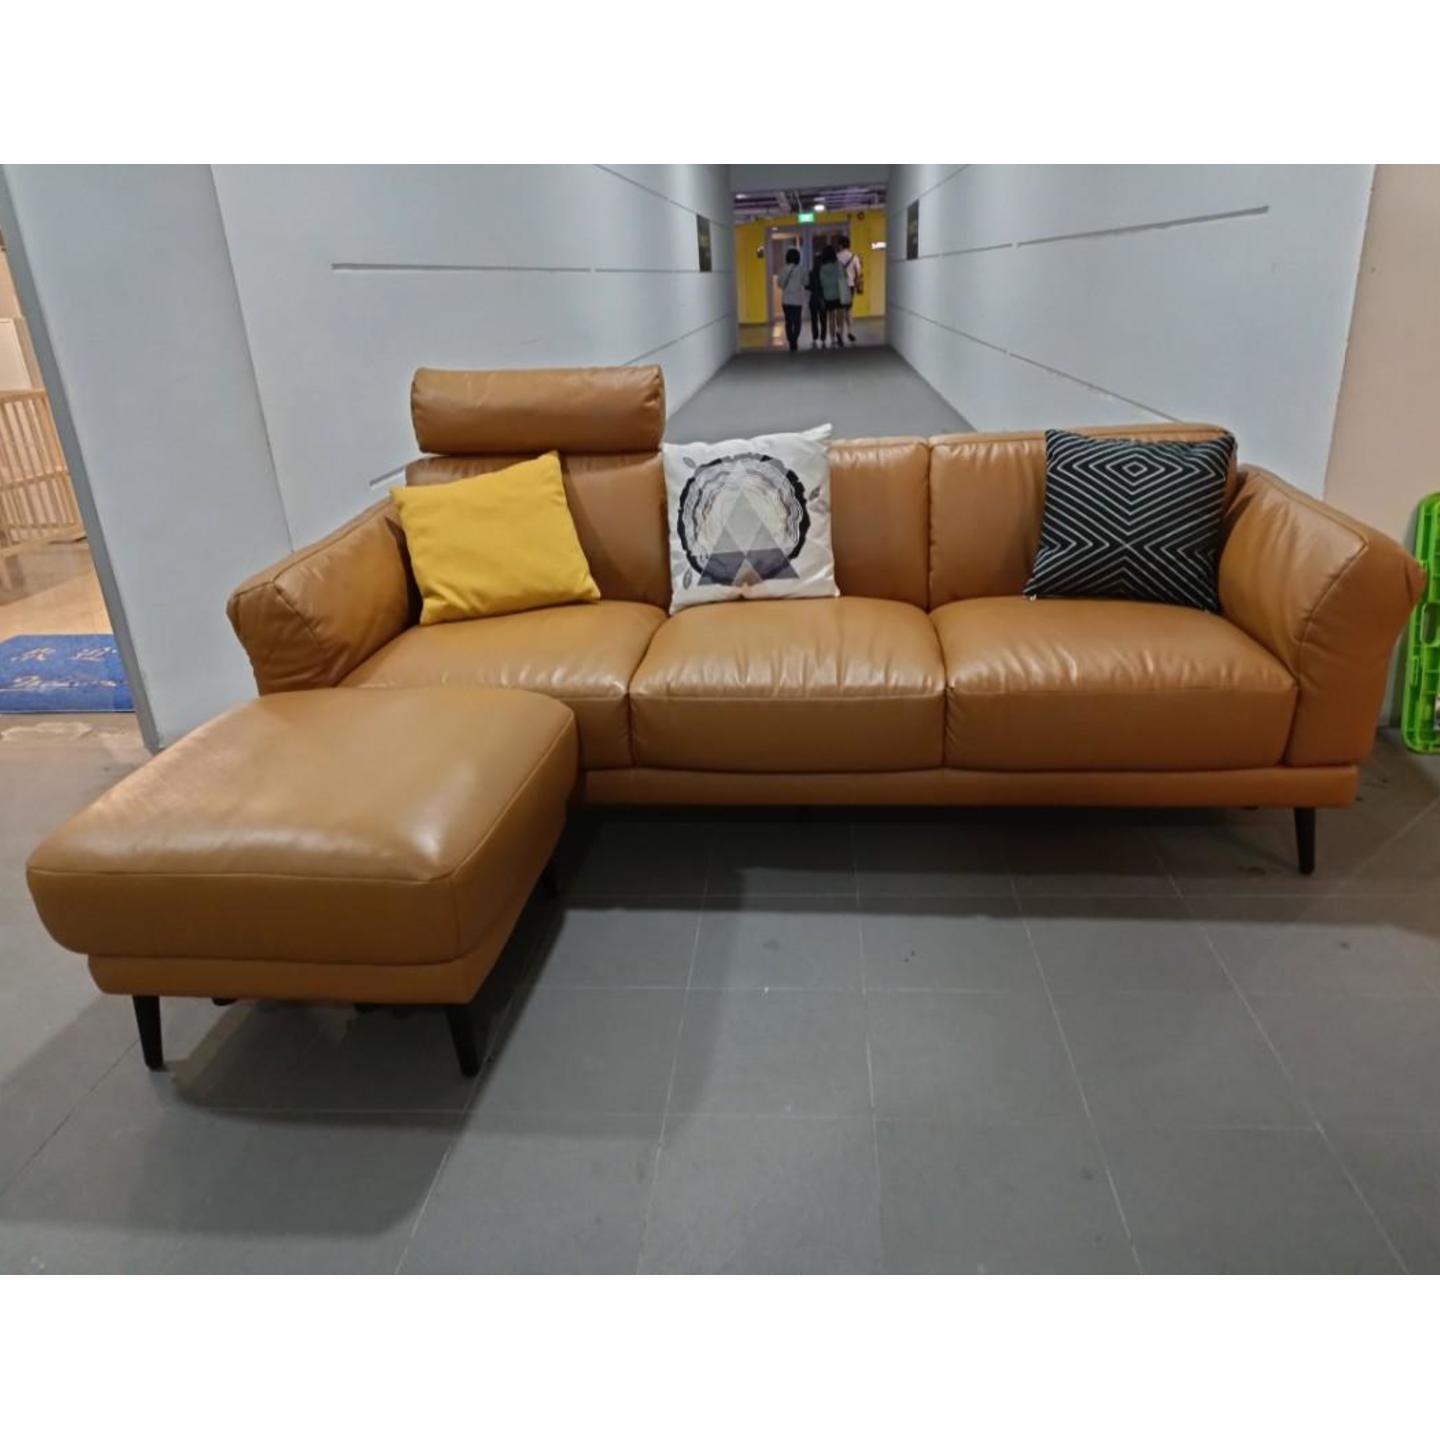 RAIKKONEN Genuine Leather 3 Seater Sofa with Ottoman in CARAMEL BROWN